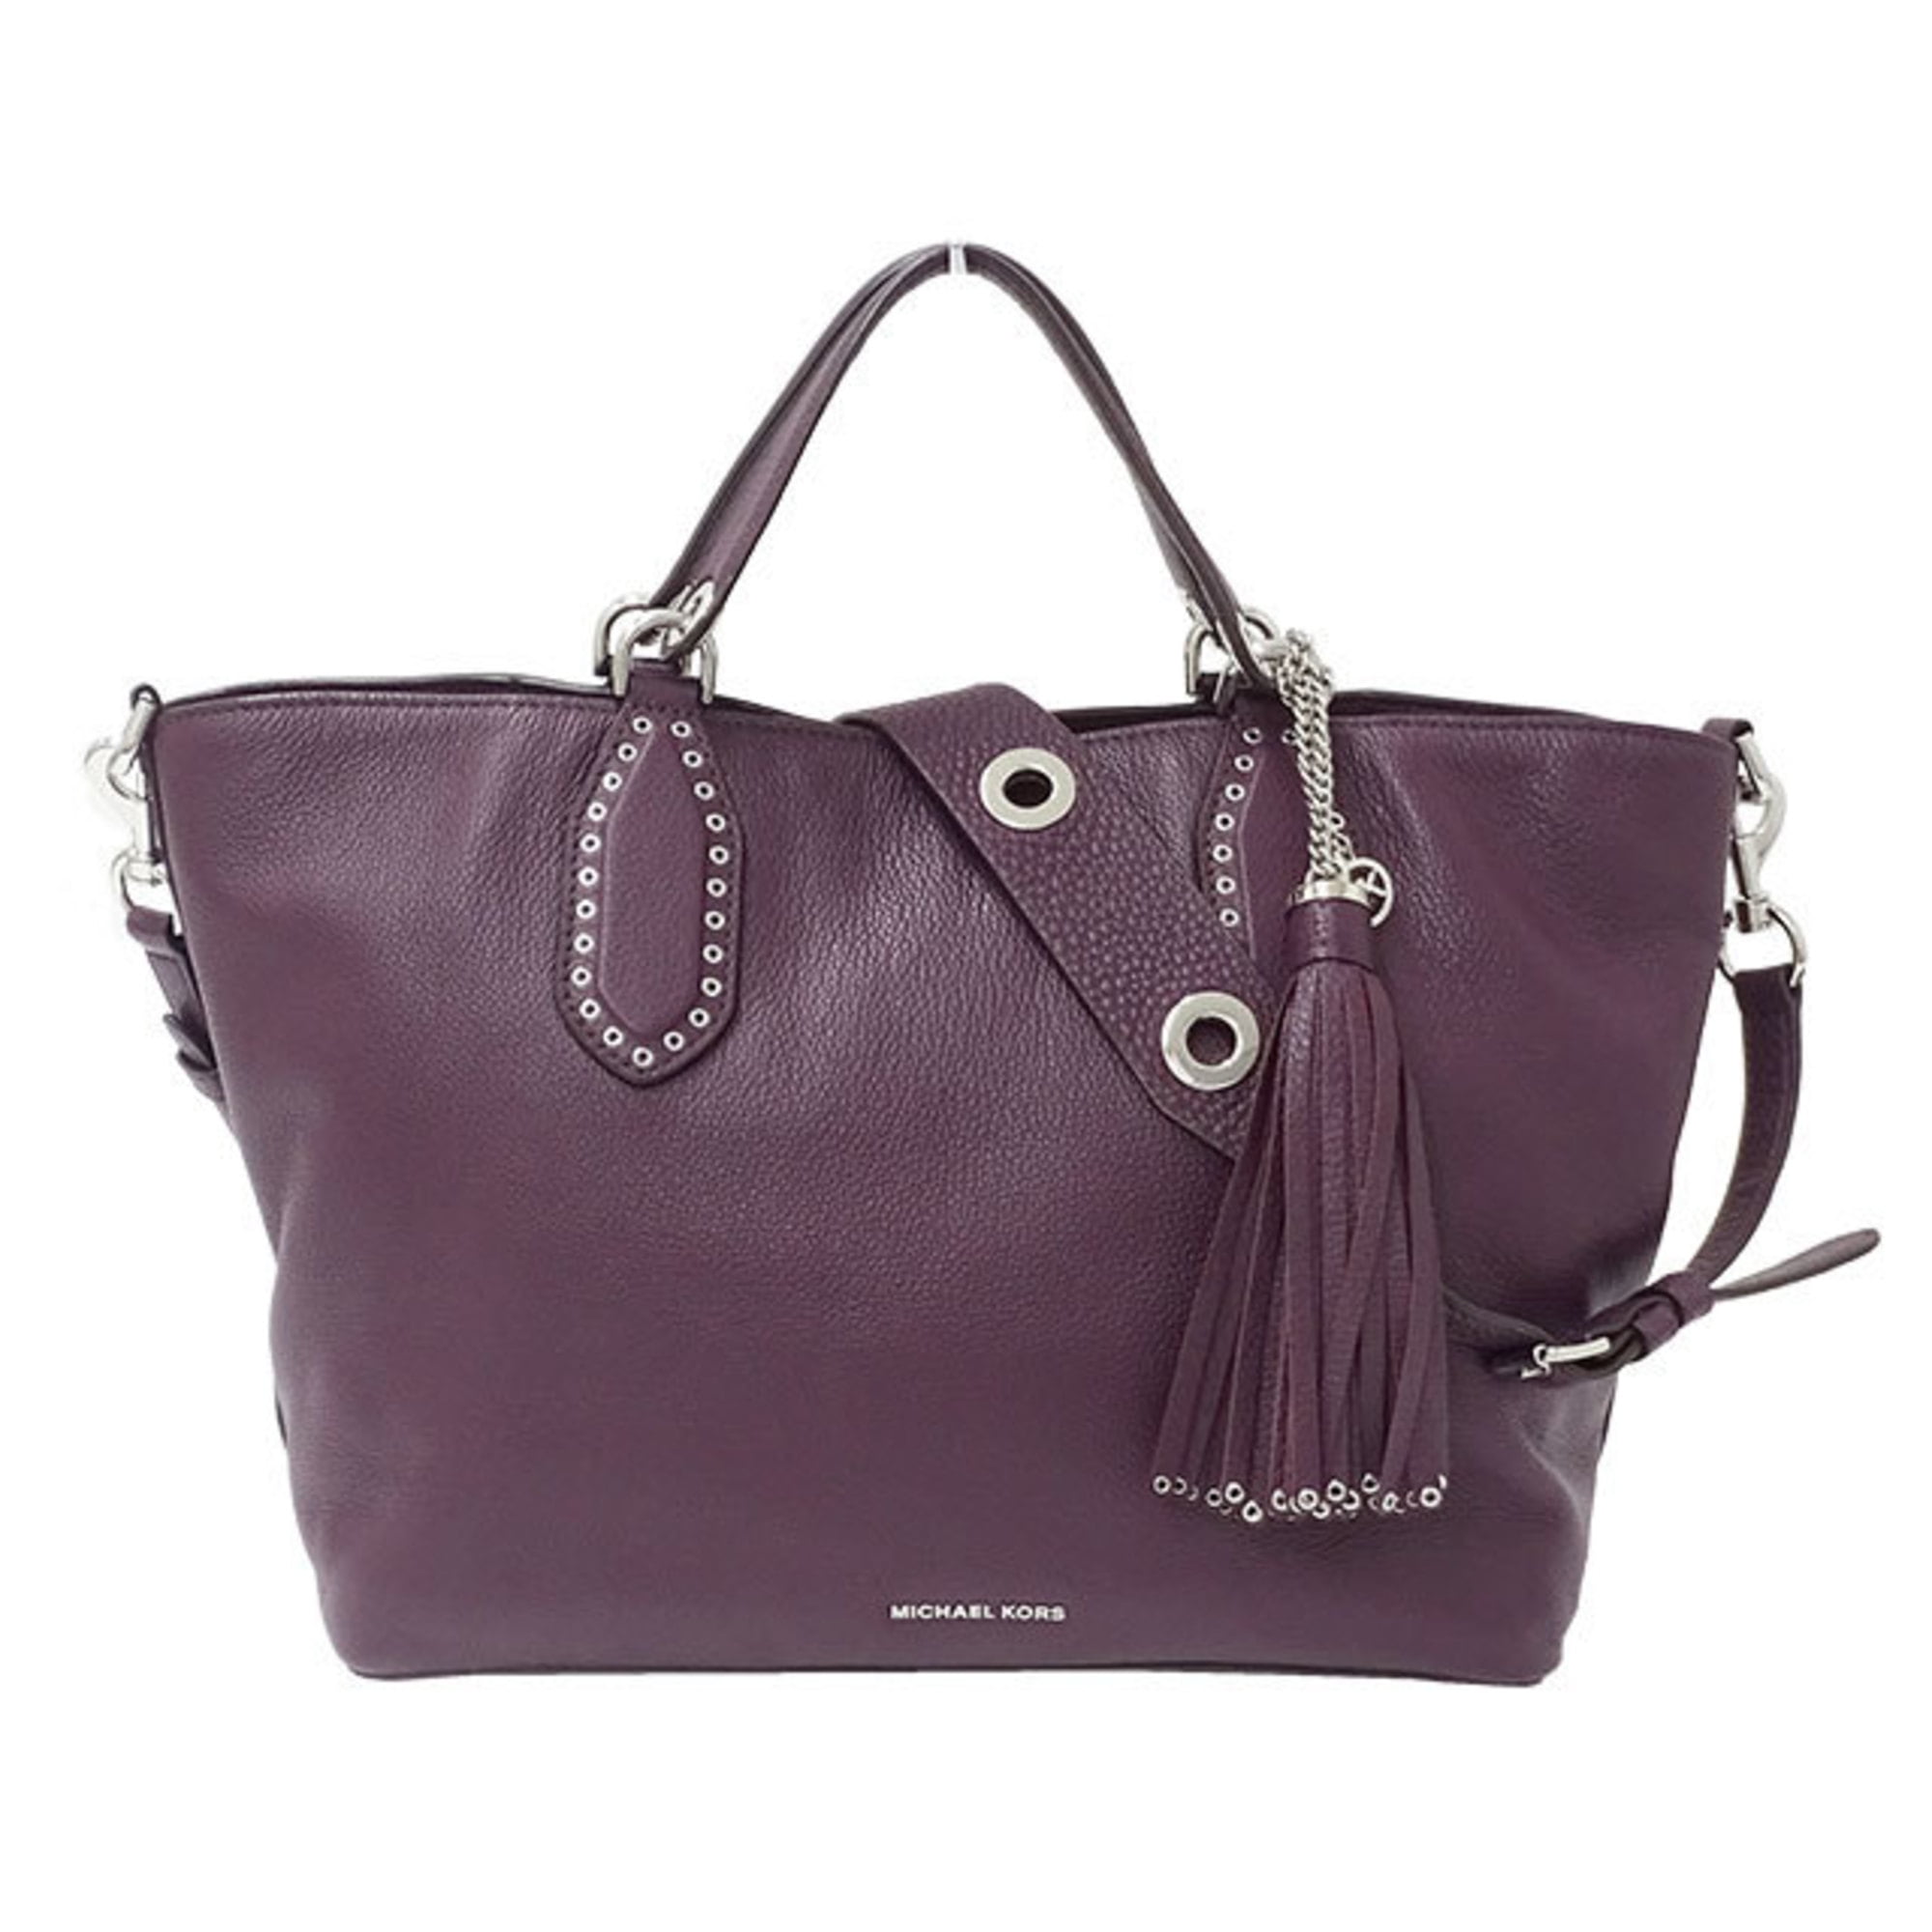 Michael Kors - Authenticated Handbag - Cloth Beige Plain For Woman, Never Worn